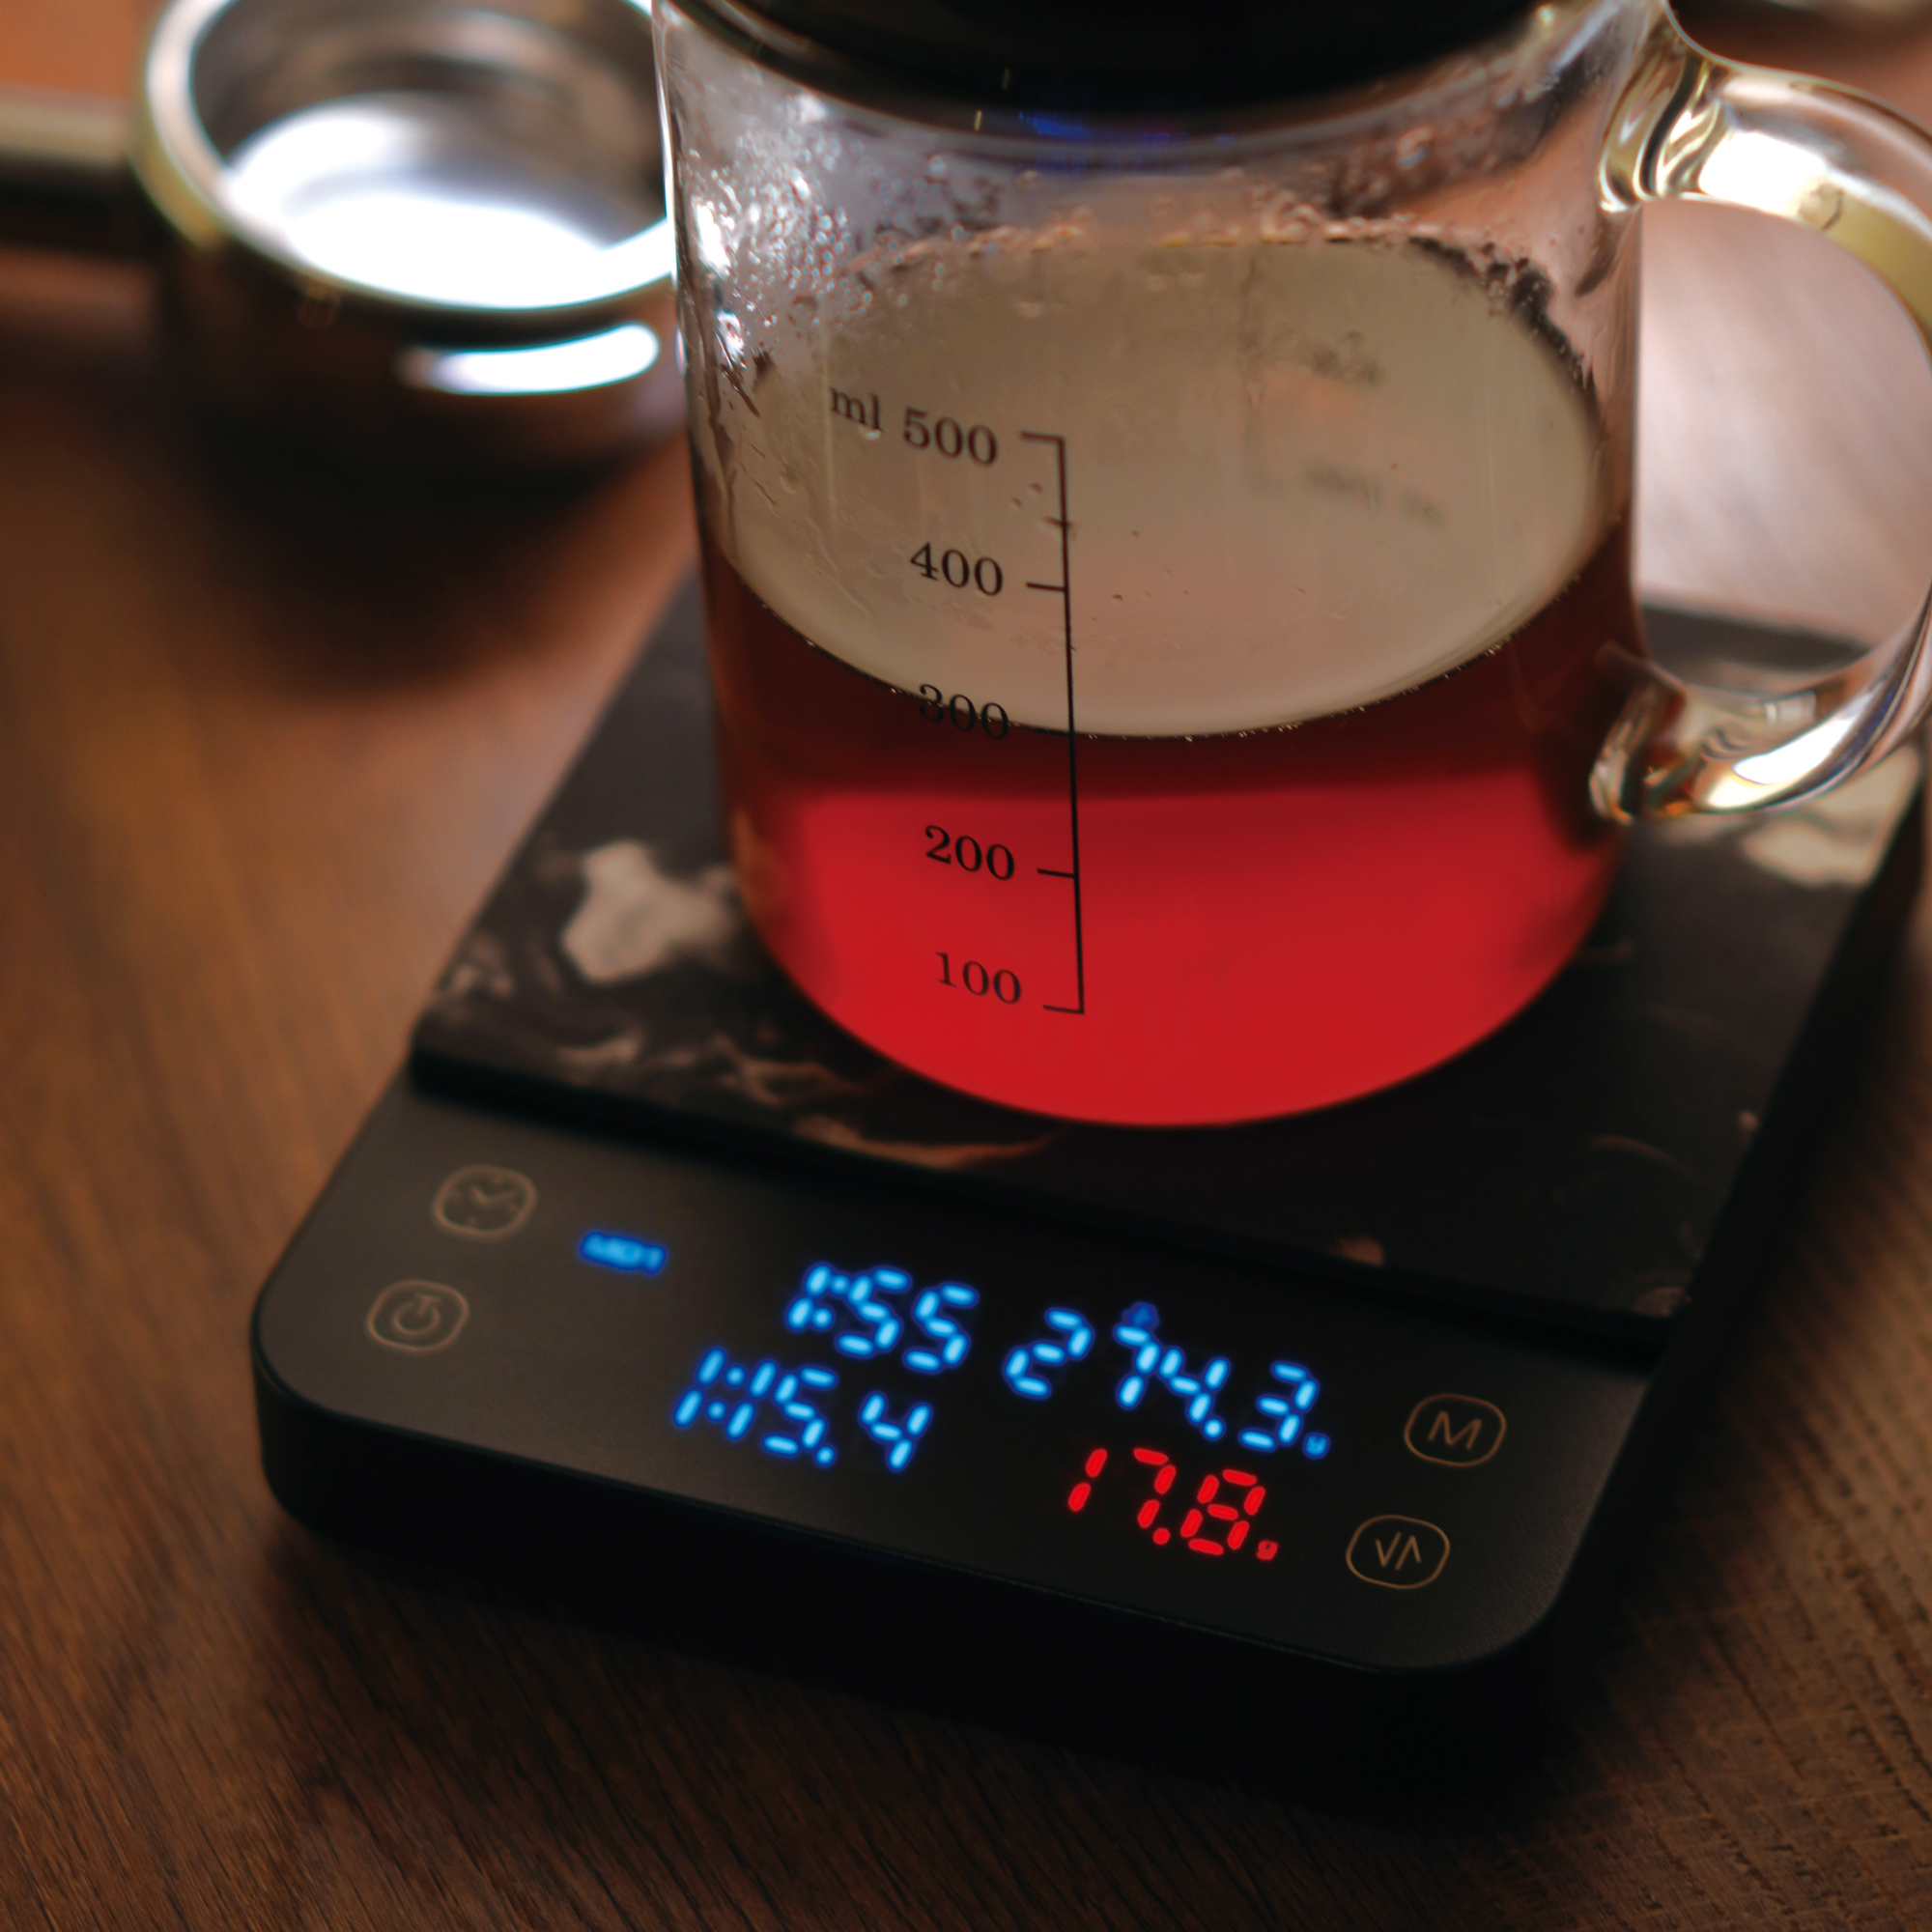 Matrix M1 Pro Smart Coffee Scale